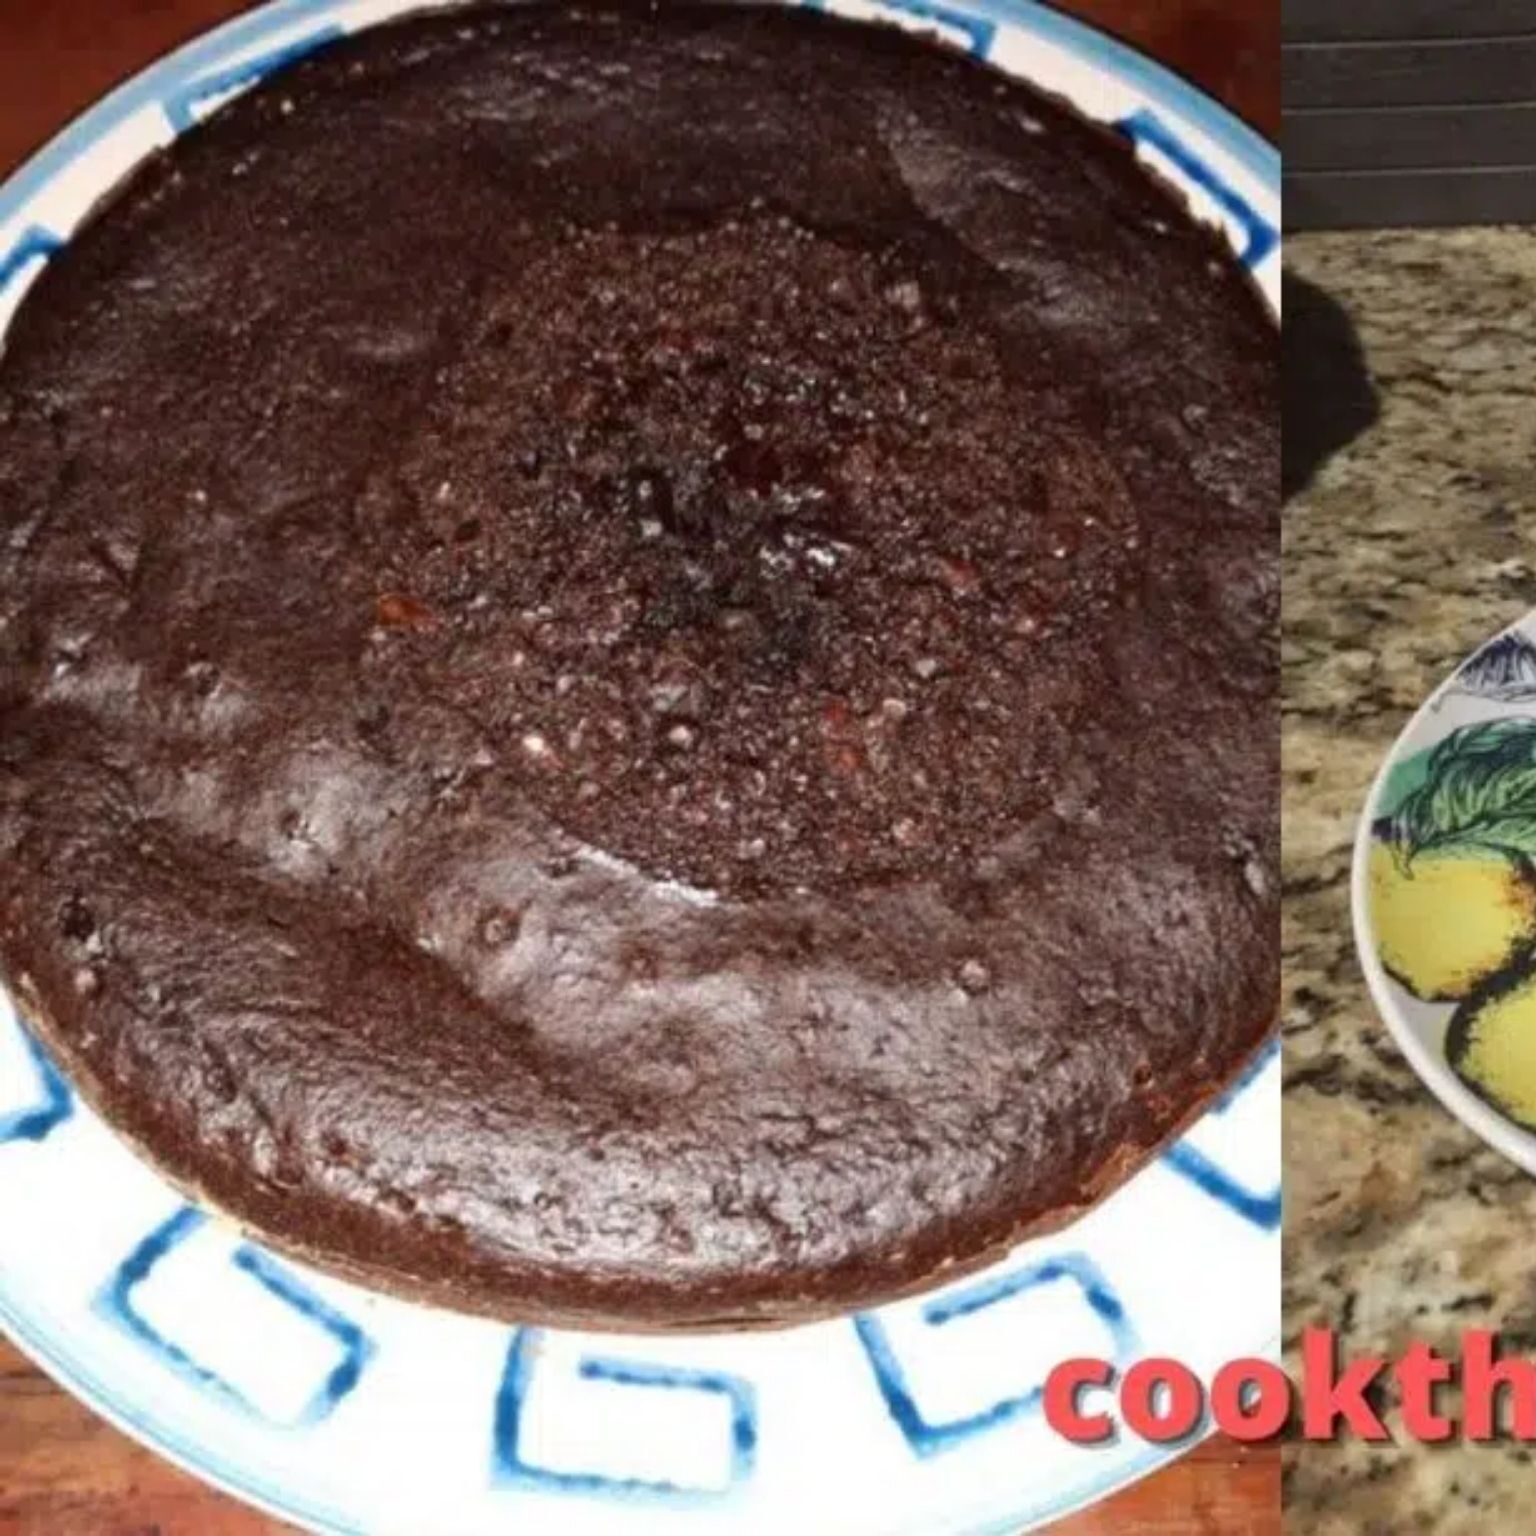 CookThisRecipe: The Best Chocolate Cake